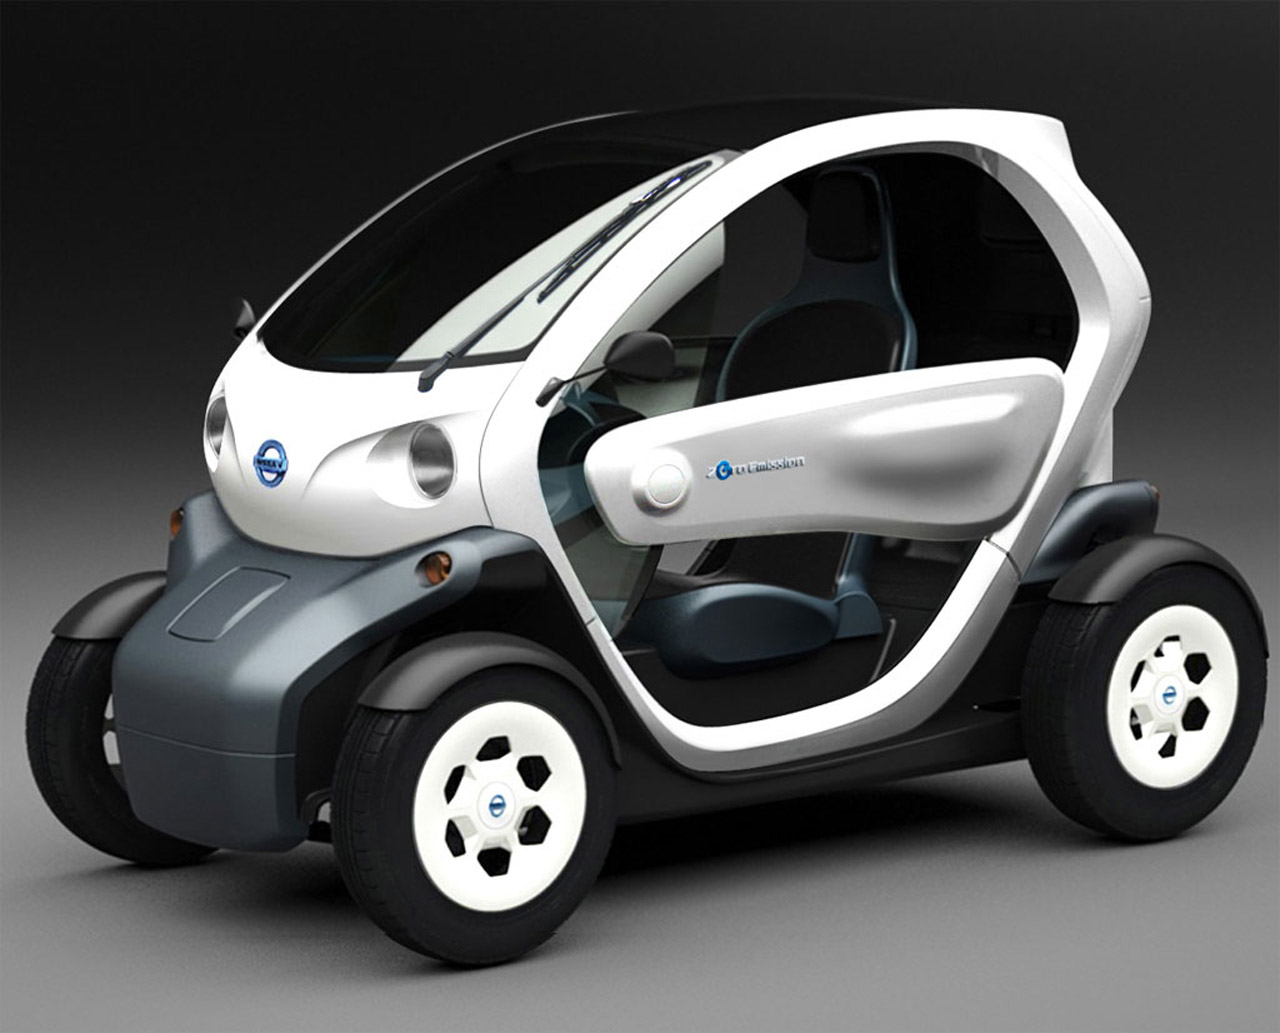 Nissan Mobility Concept